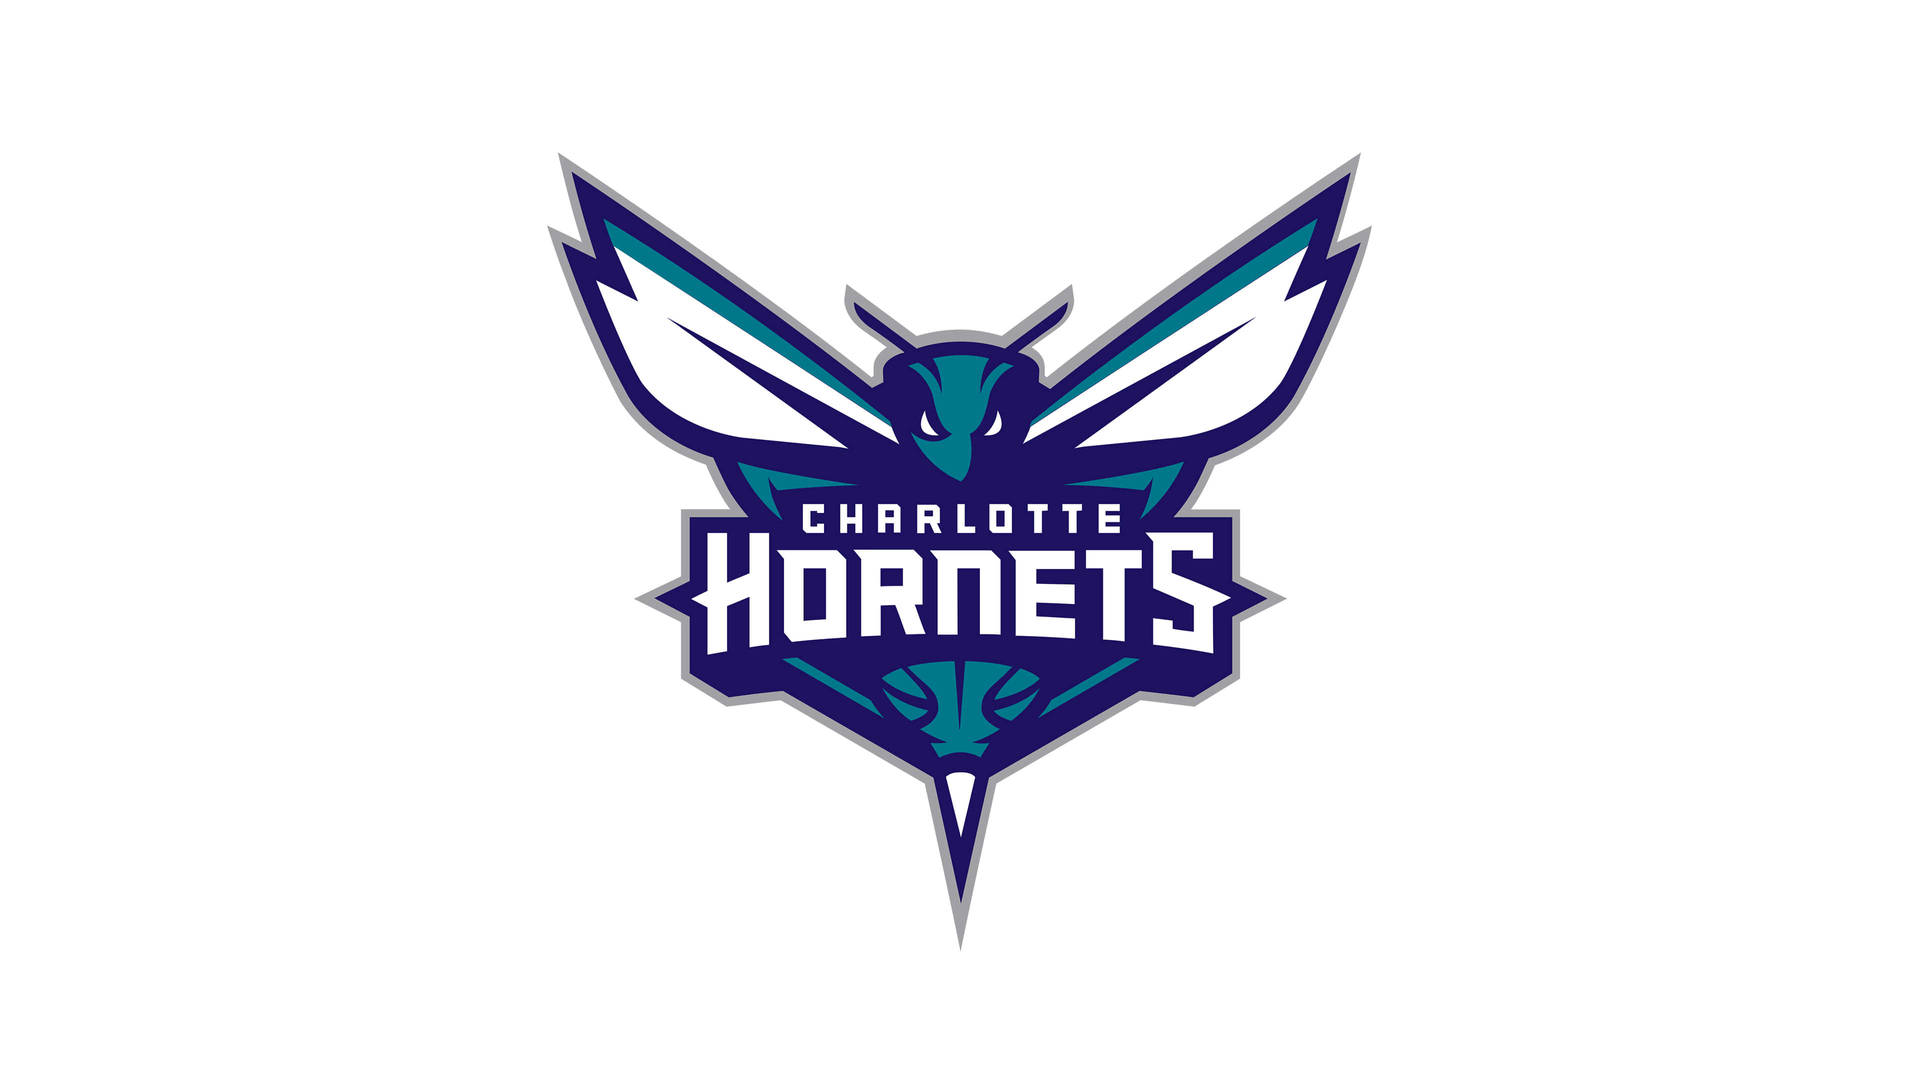 Charlotte Hornets Official Logo Background